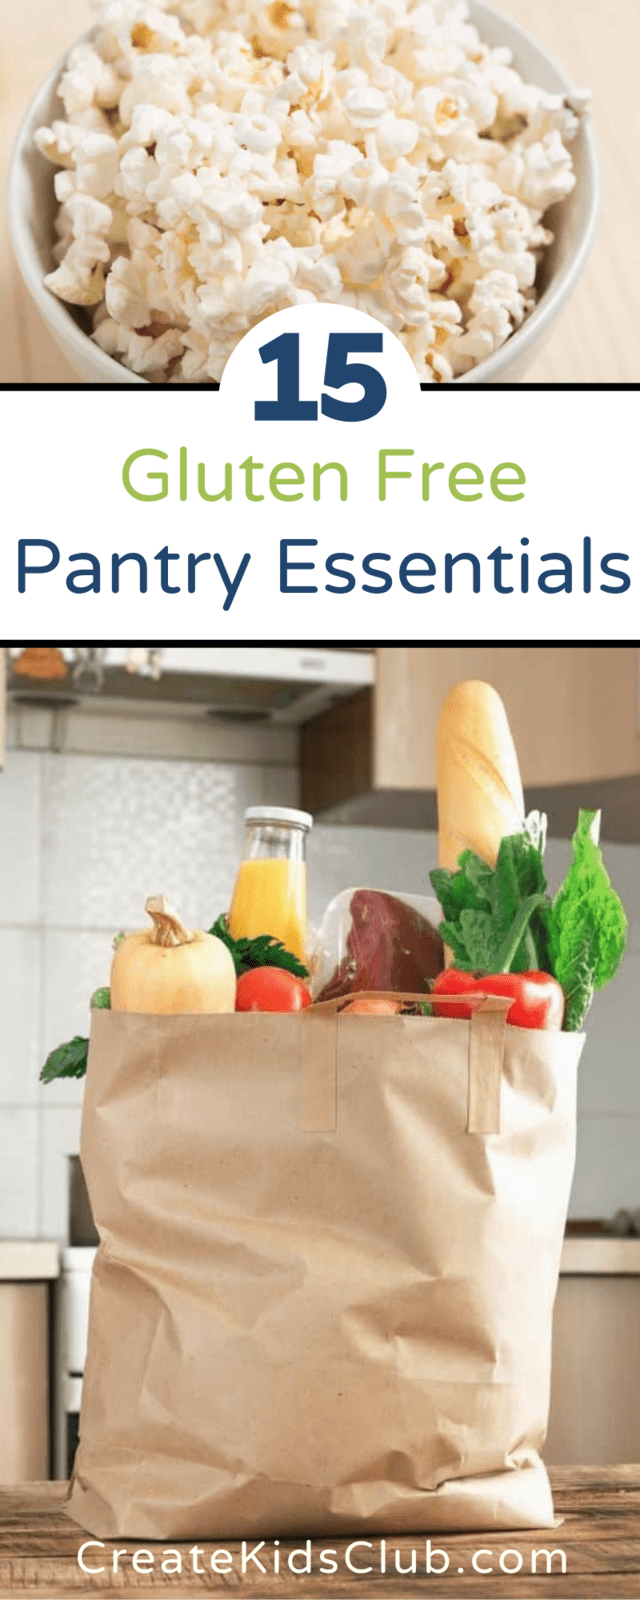 15 GF Pantry Essentials